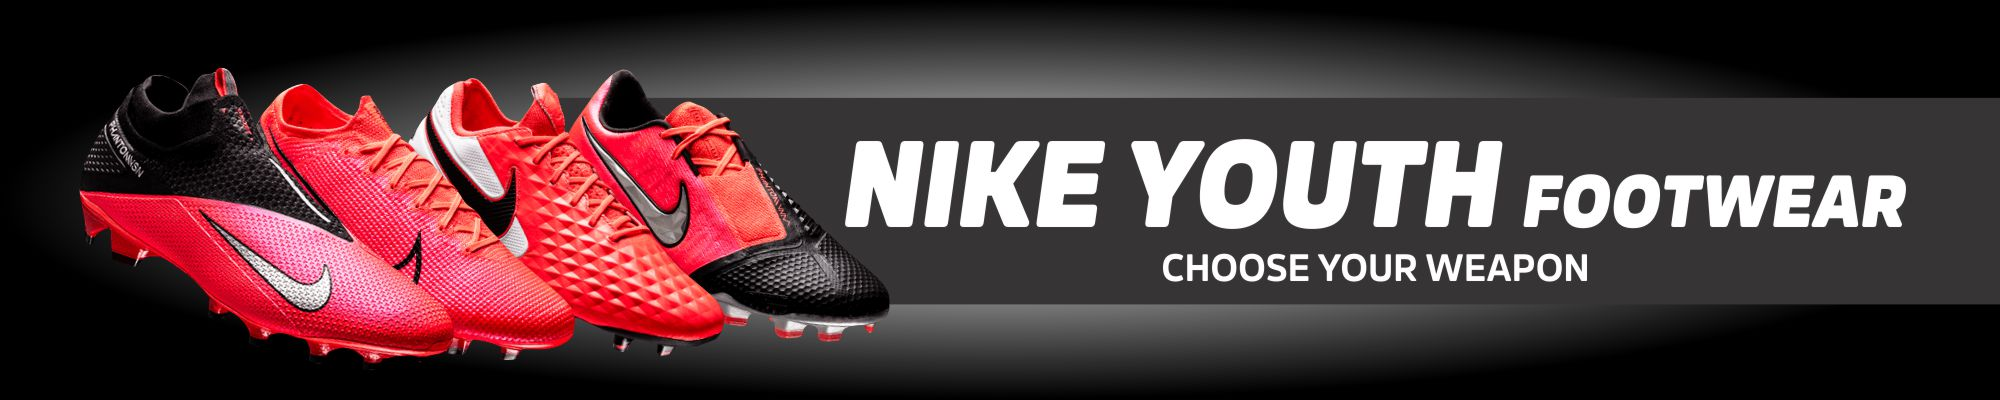 Nike Youth Footwear